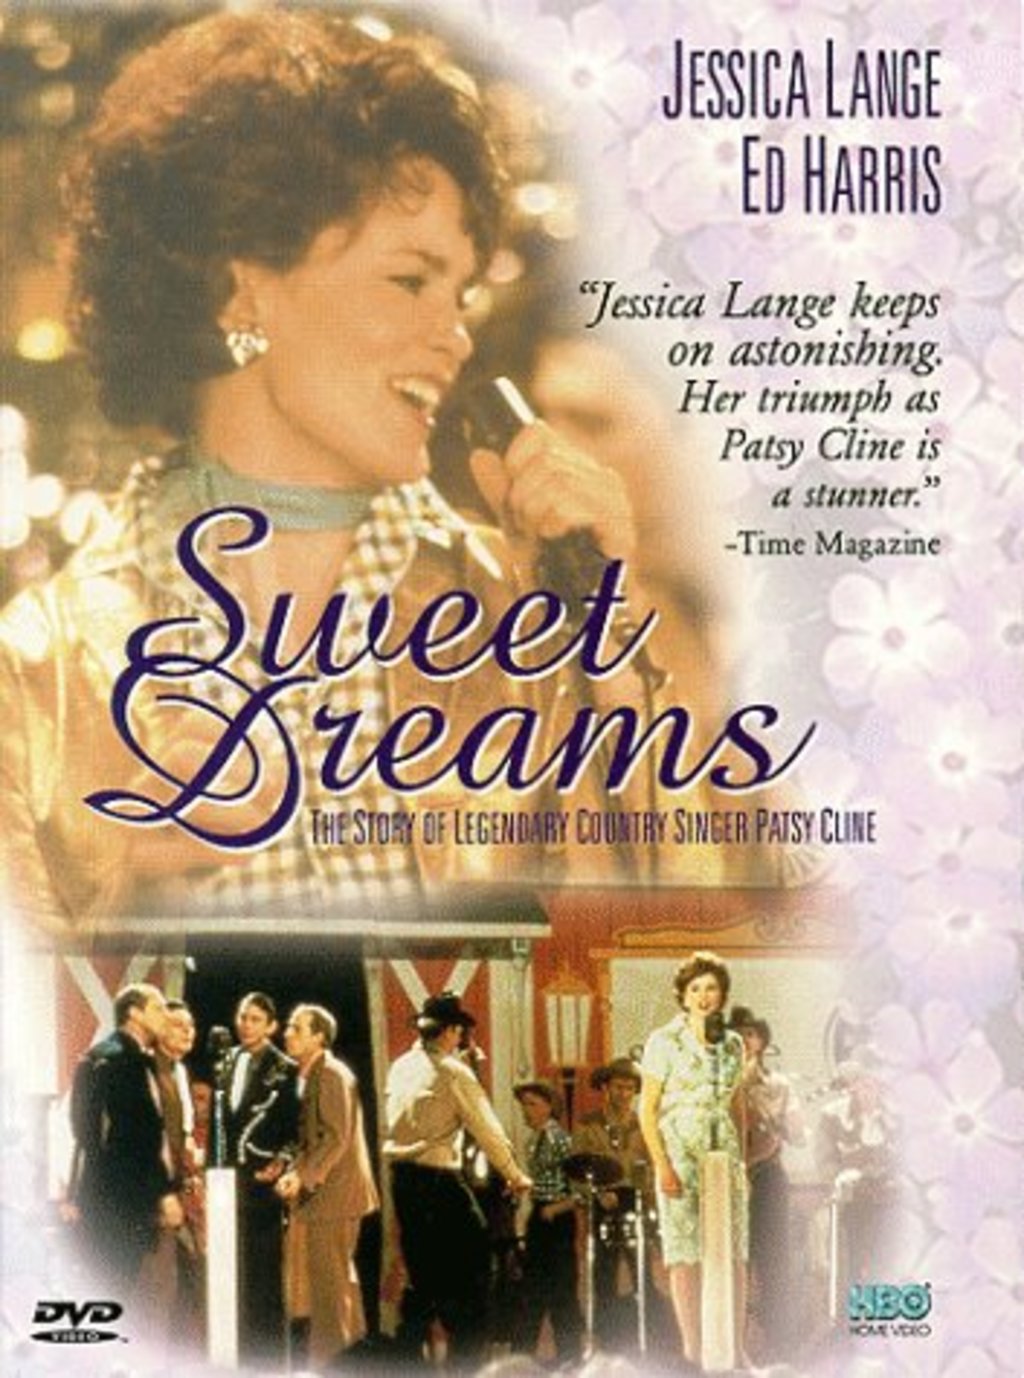 Watch Sweet Dreams on Netflix Today! | NetflixMovies.com